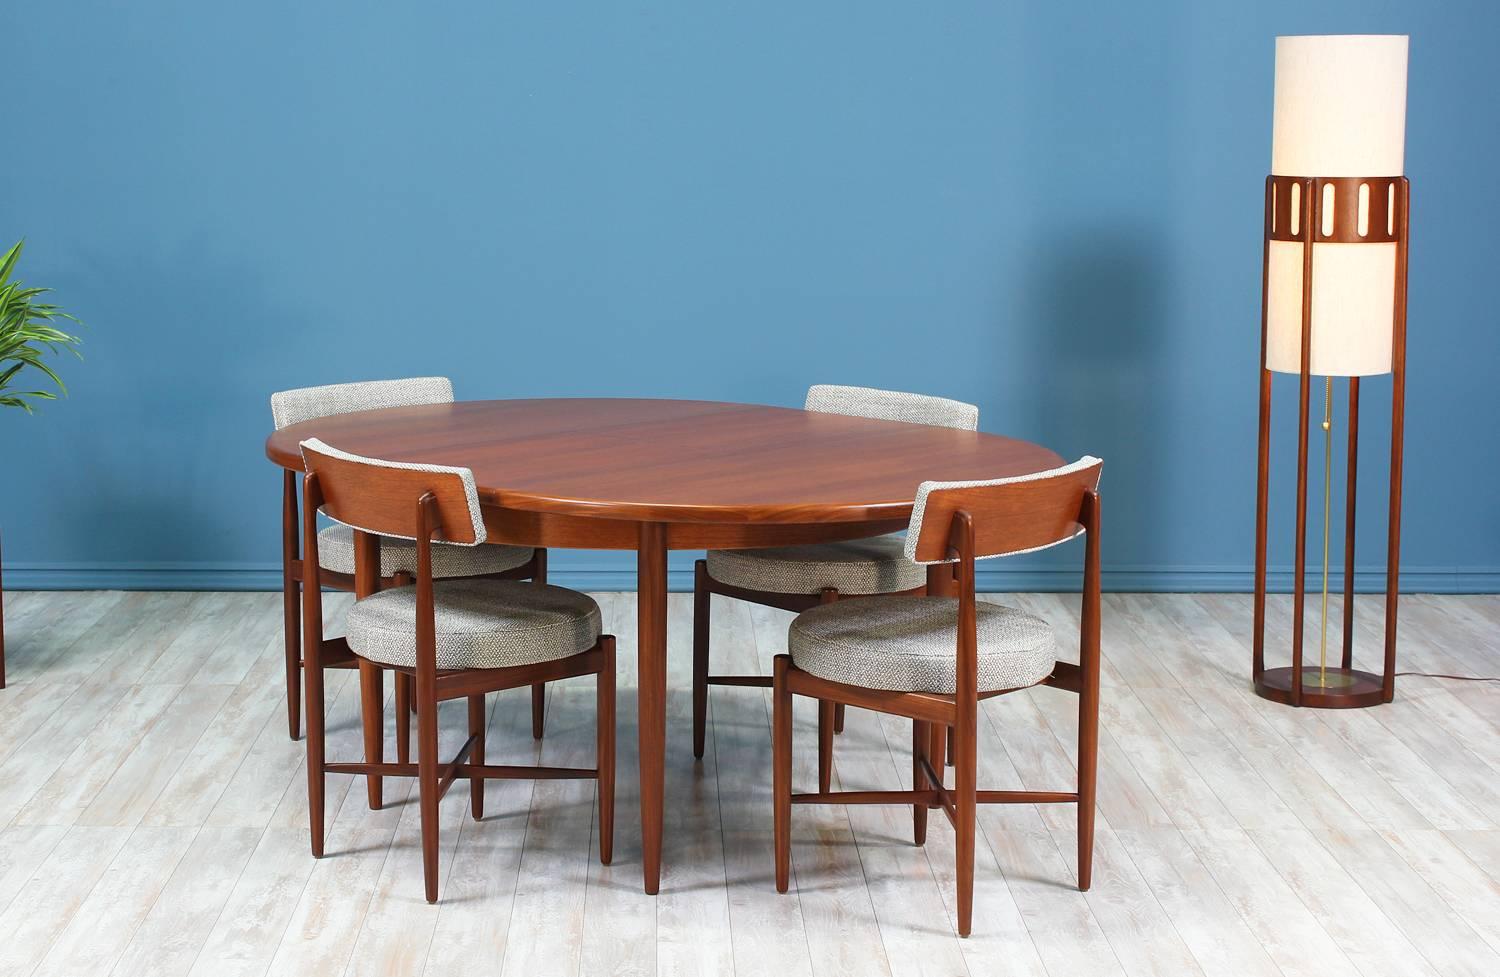 English Ib Kofod-Larsen Dining Set with Six Chairs for G-Plan